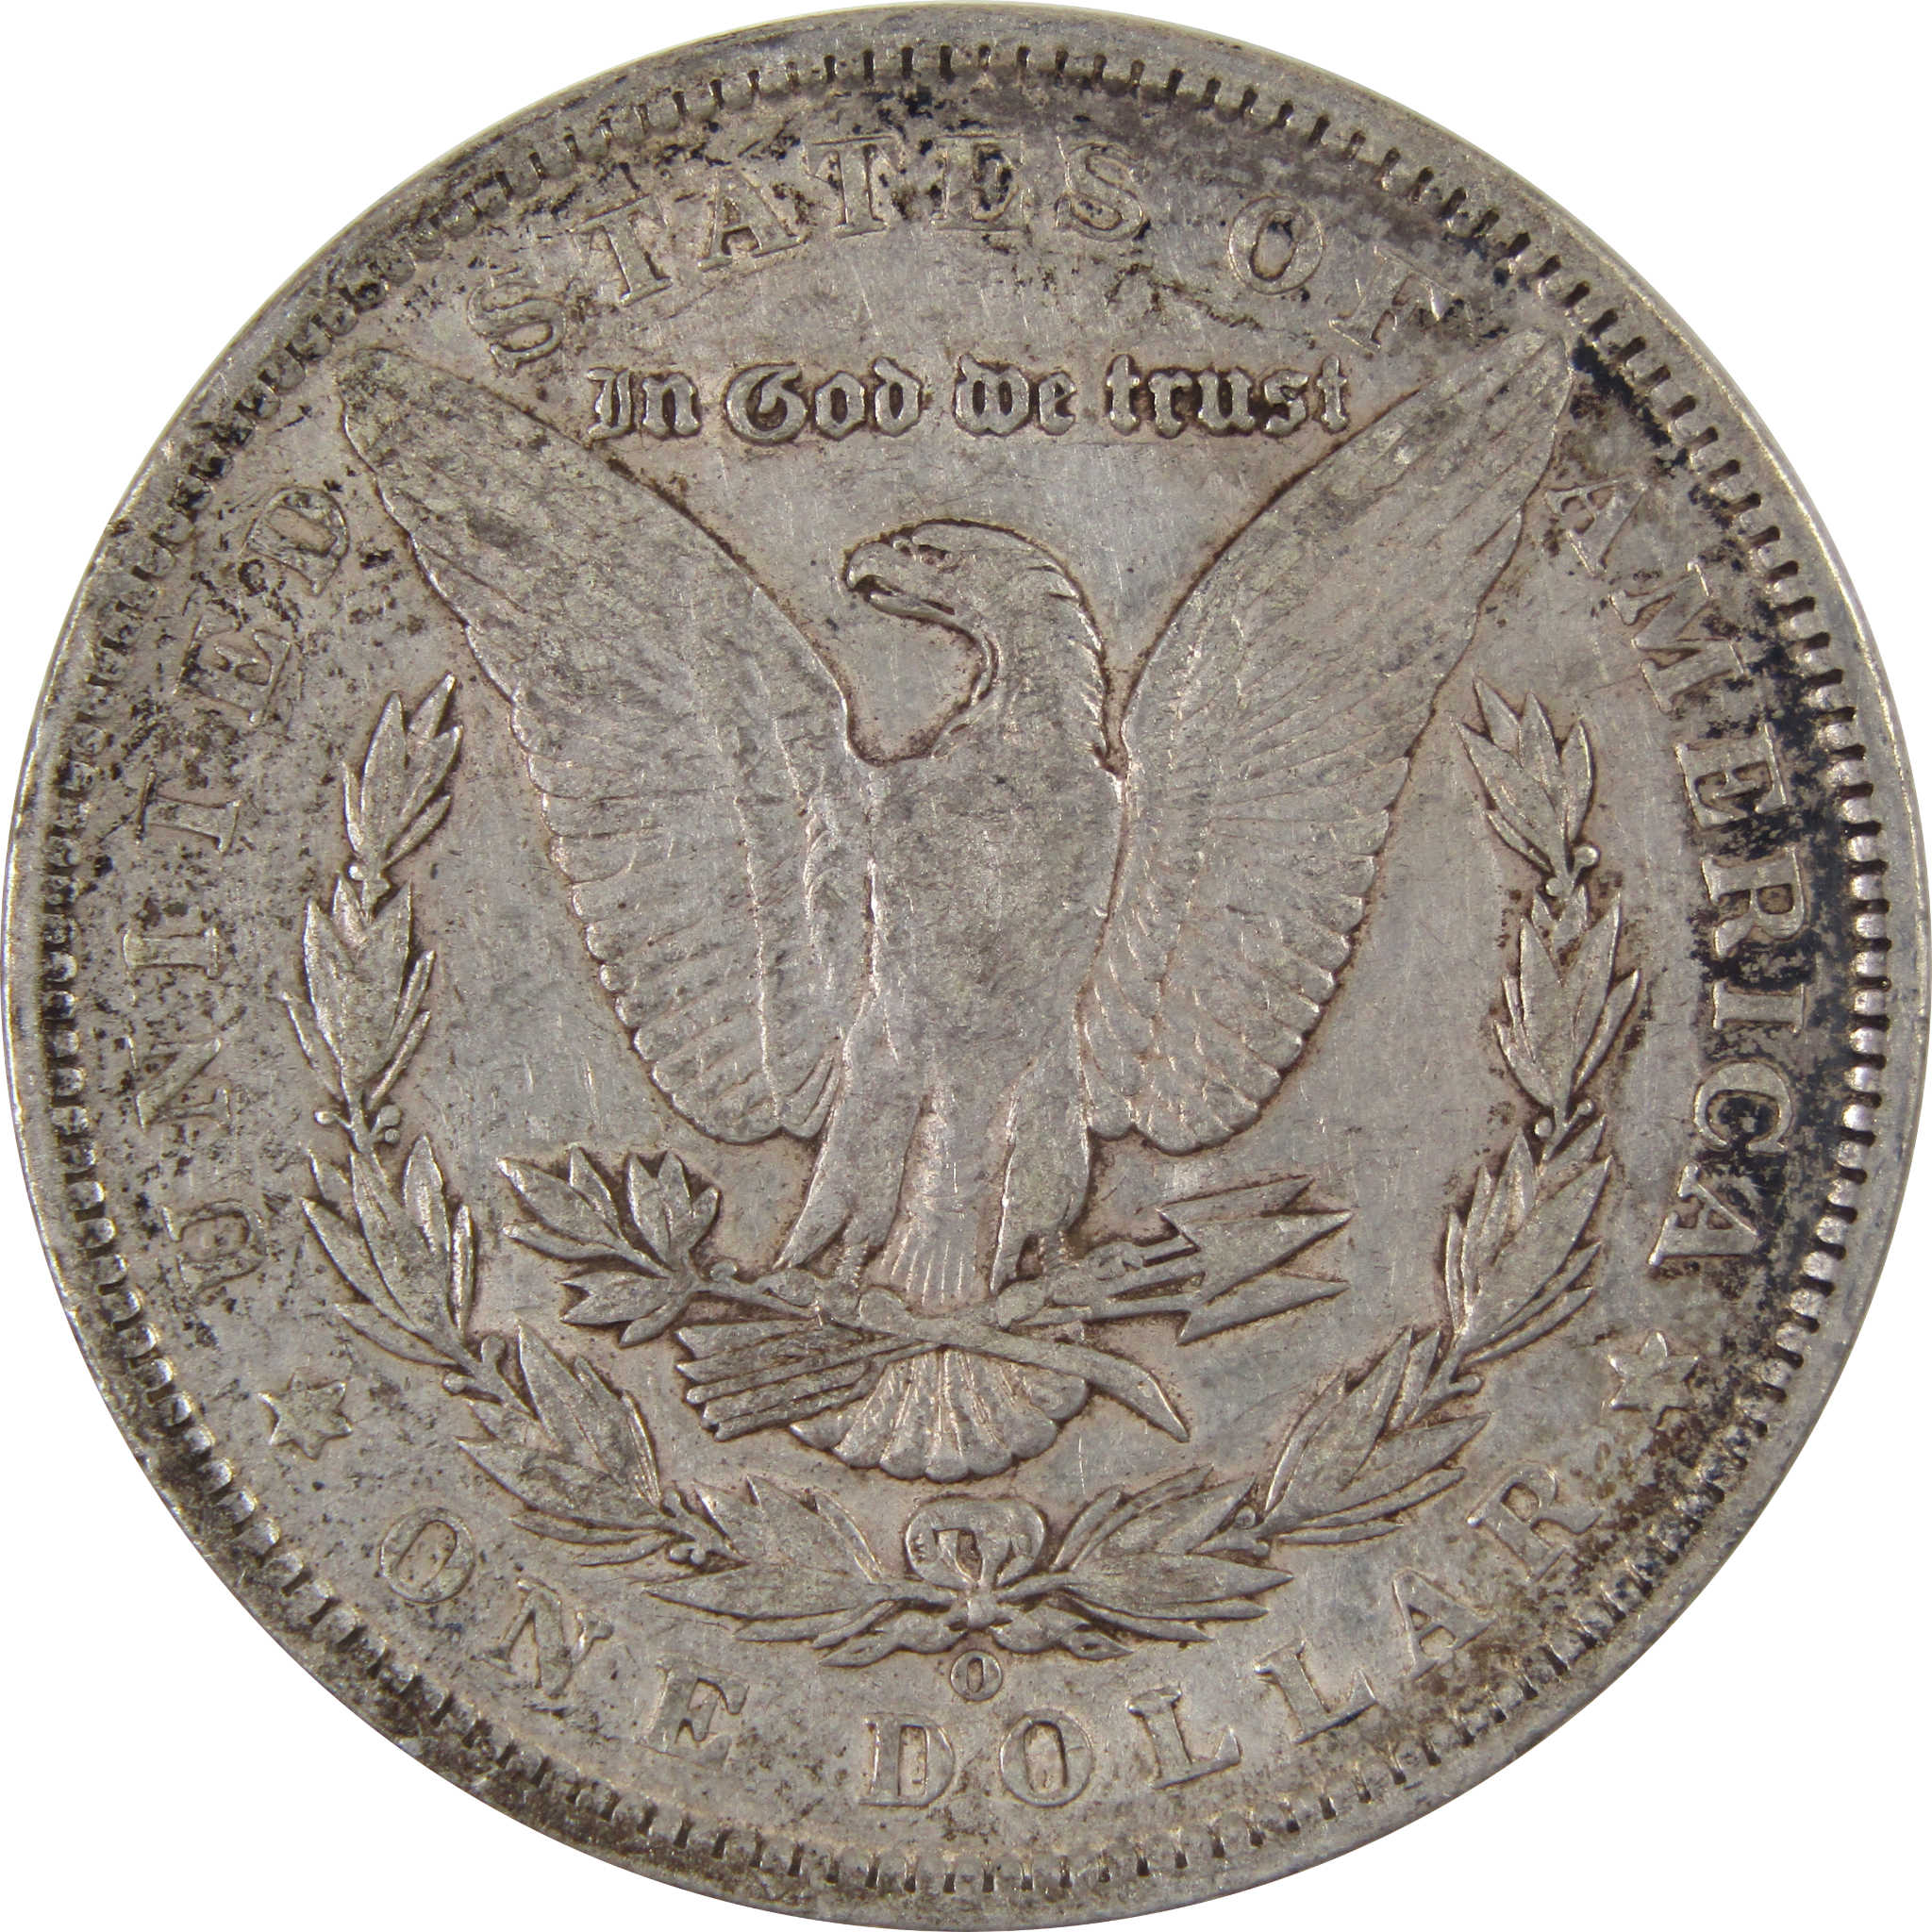 1891 O Morgan Dollar VF Very Fine 90% Silver US Coin SKU:I2807 - Morgan coin - Morgan silver dollar - Morgan silver dollar for sale - Profile Coins &amp; Collectibles